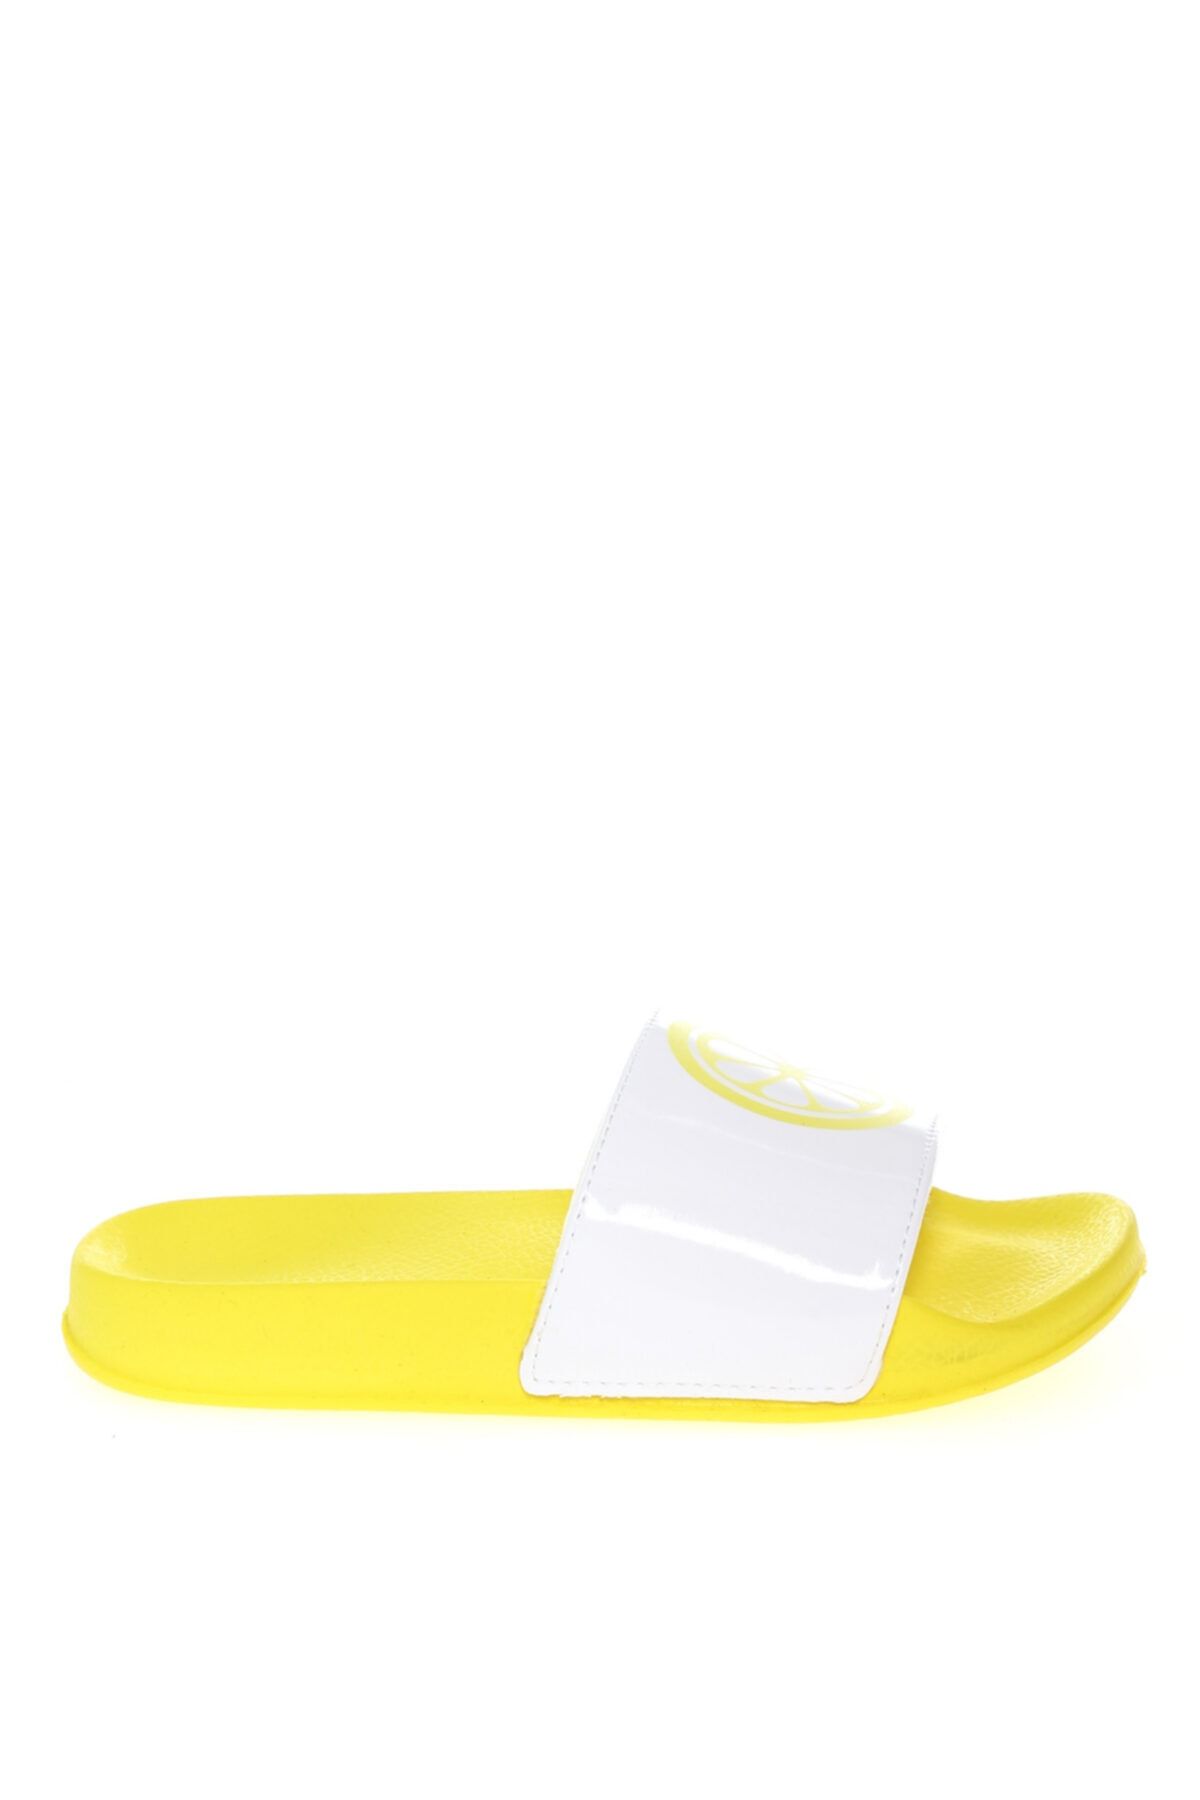 LİMON COMPANY Limon Company Kız Çocuk Sarı Sandalet